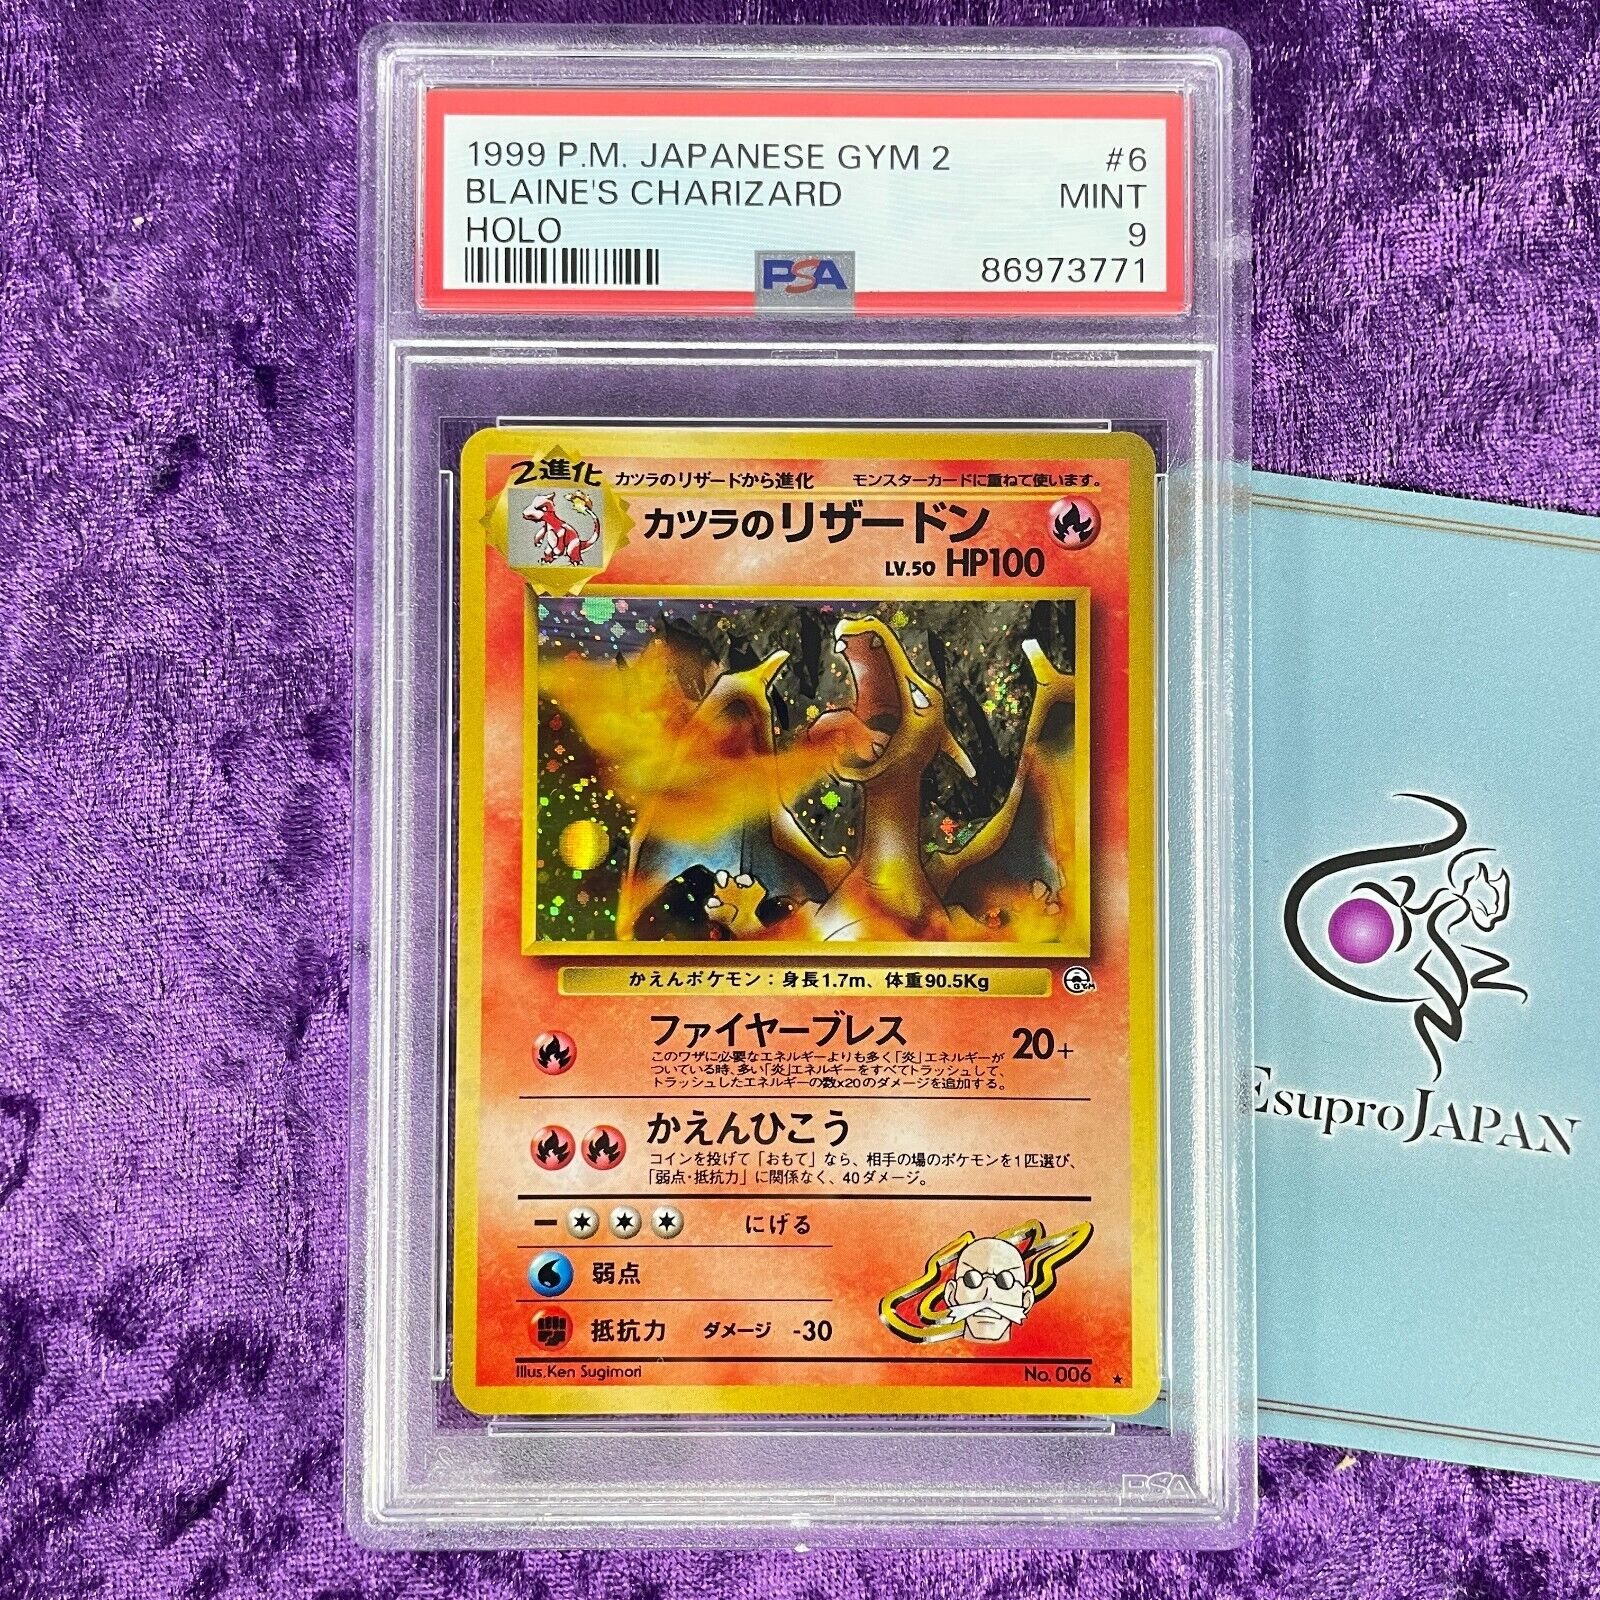 PSA 9 1999 Blaine's Charizard Holo #006 Pokemon Card Japanese Gym2 Vintage Mint